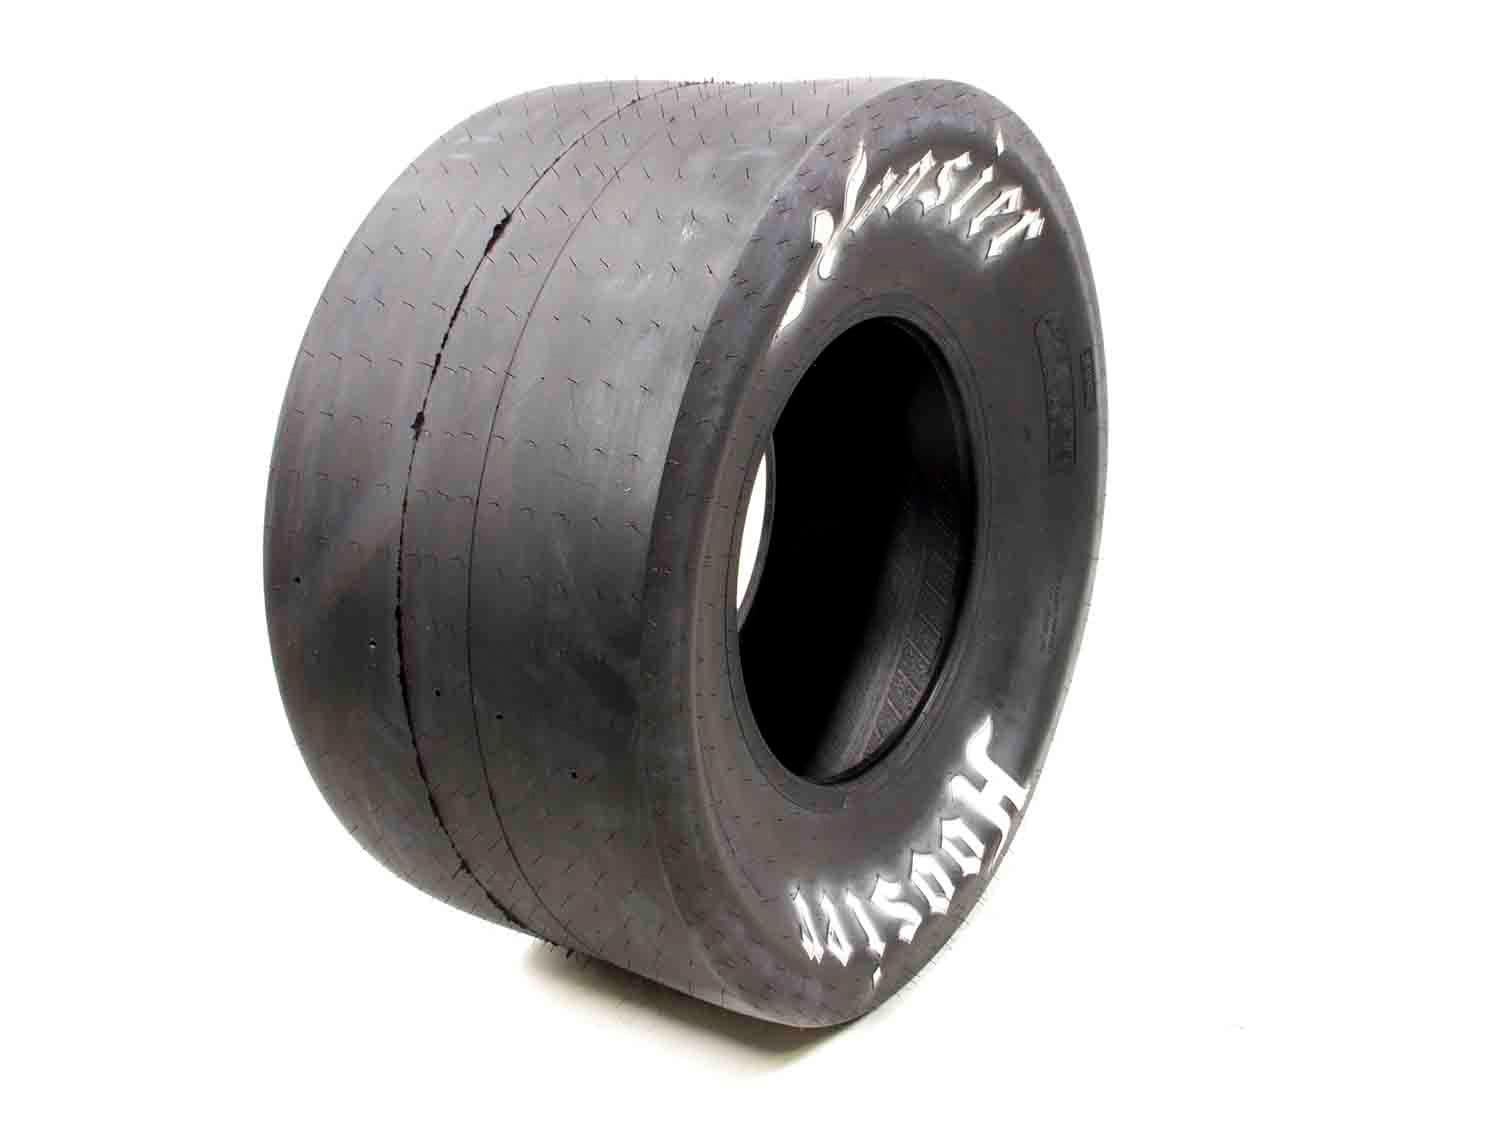 29.0/10-15 Drag Tire - Burlile Performance Products